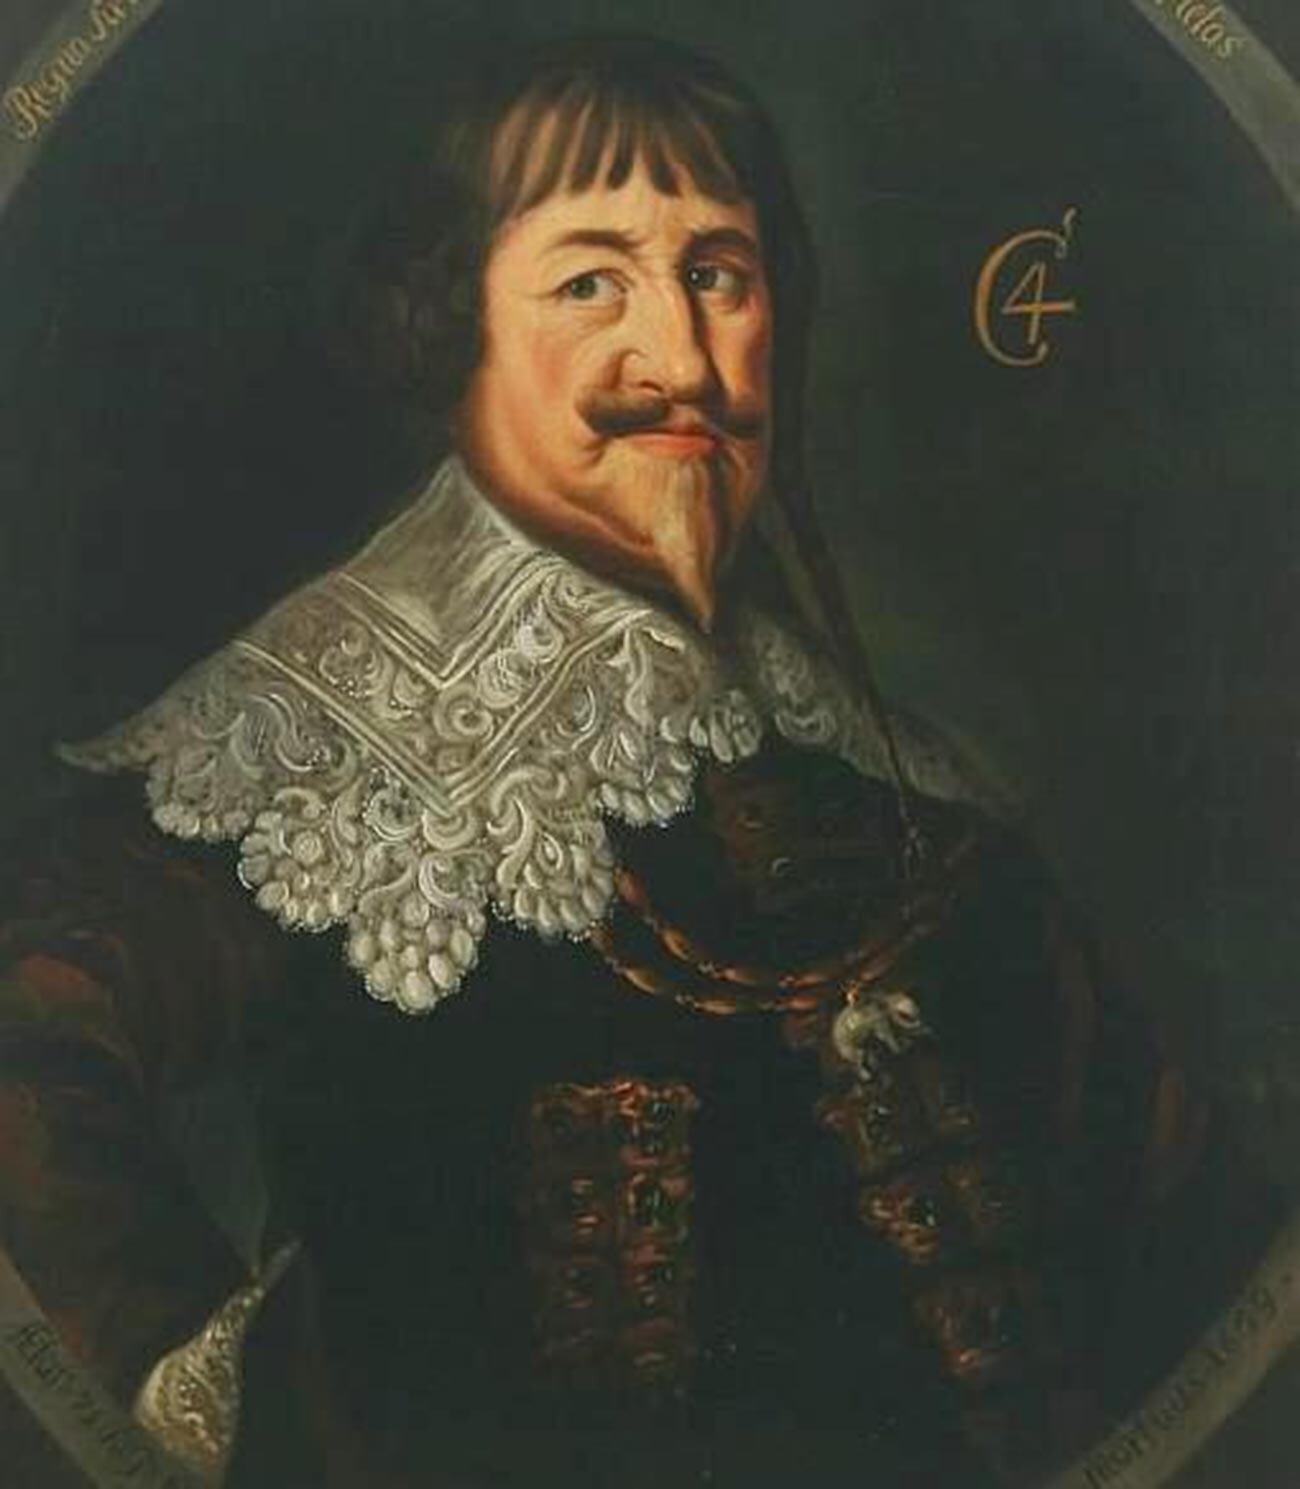 Portret kralja Kristjana IV 